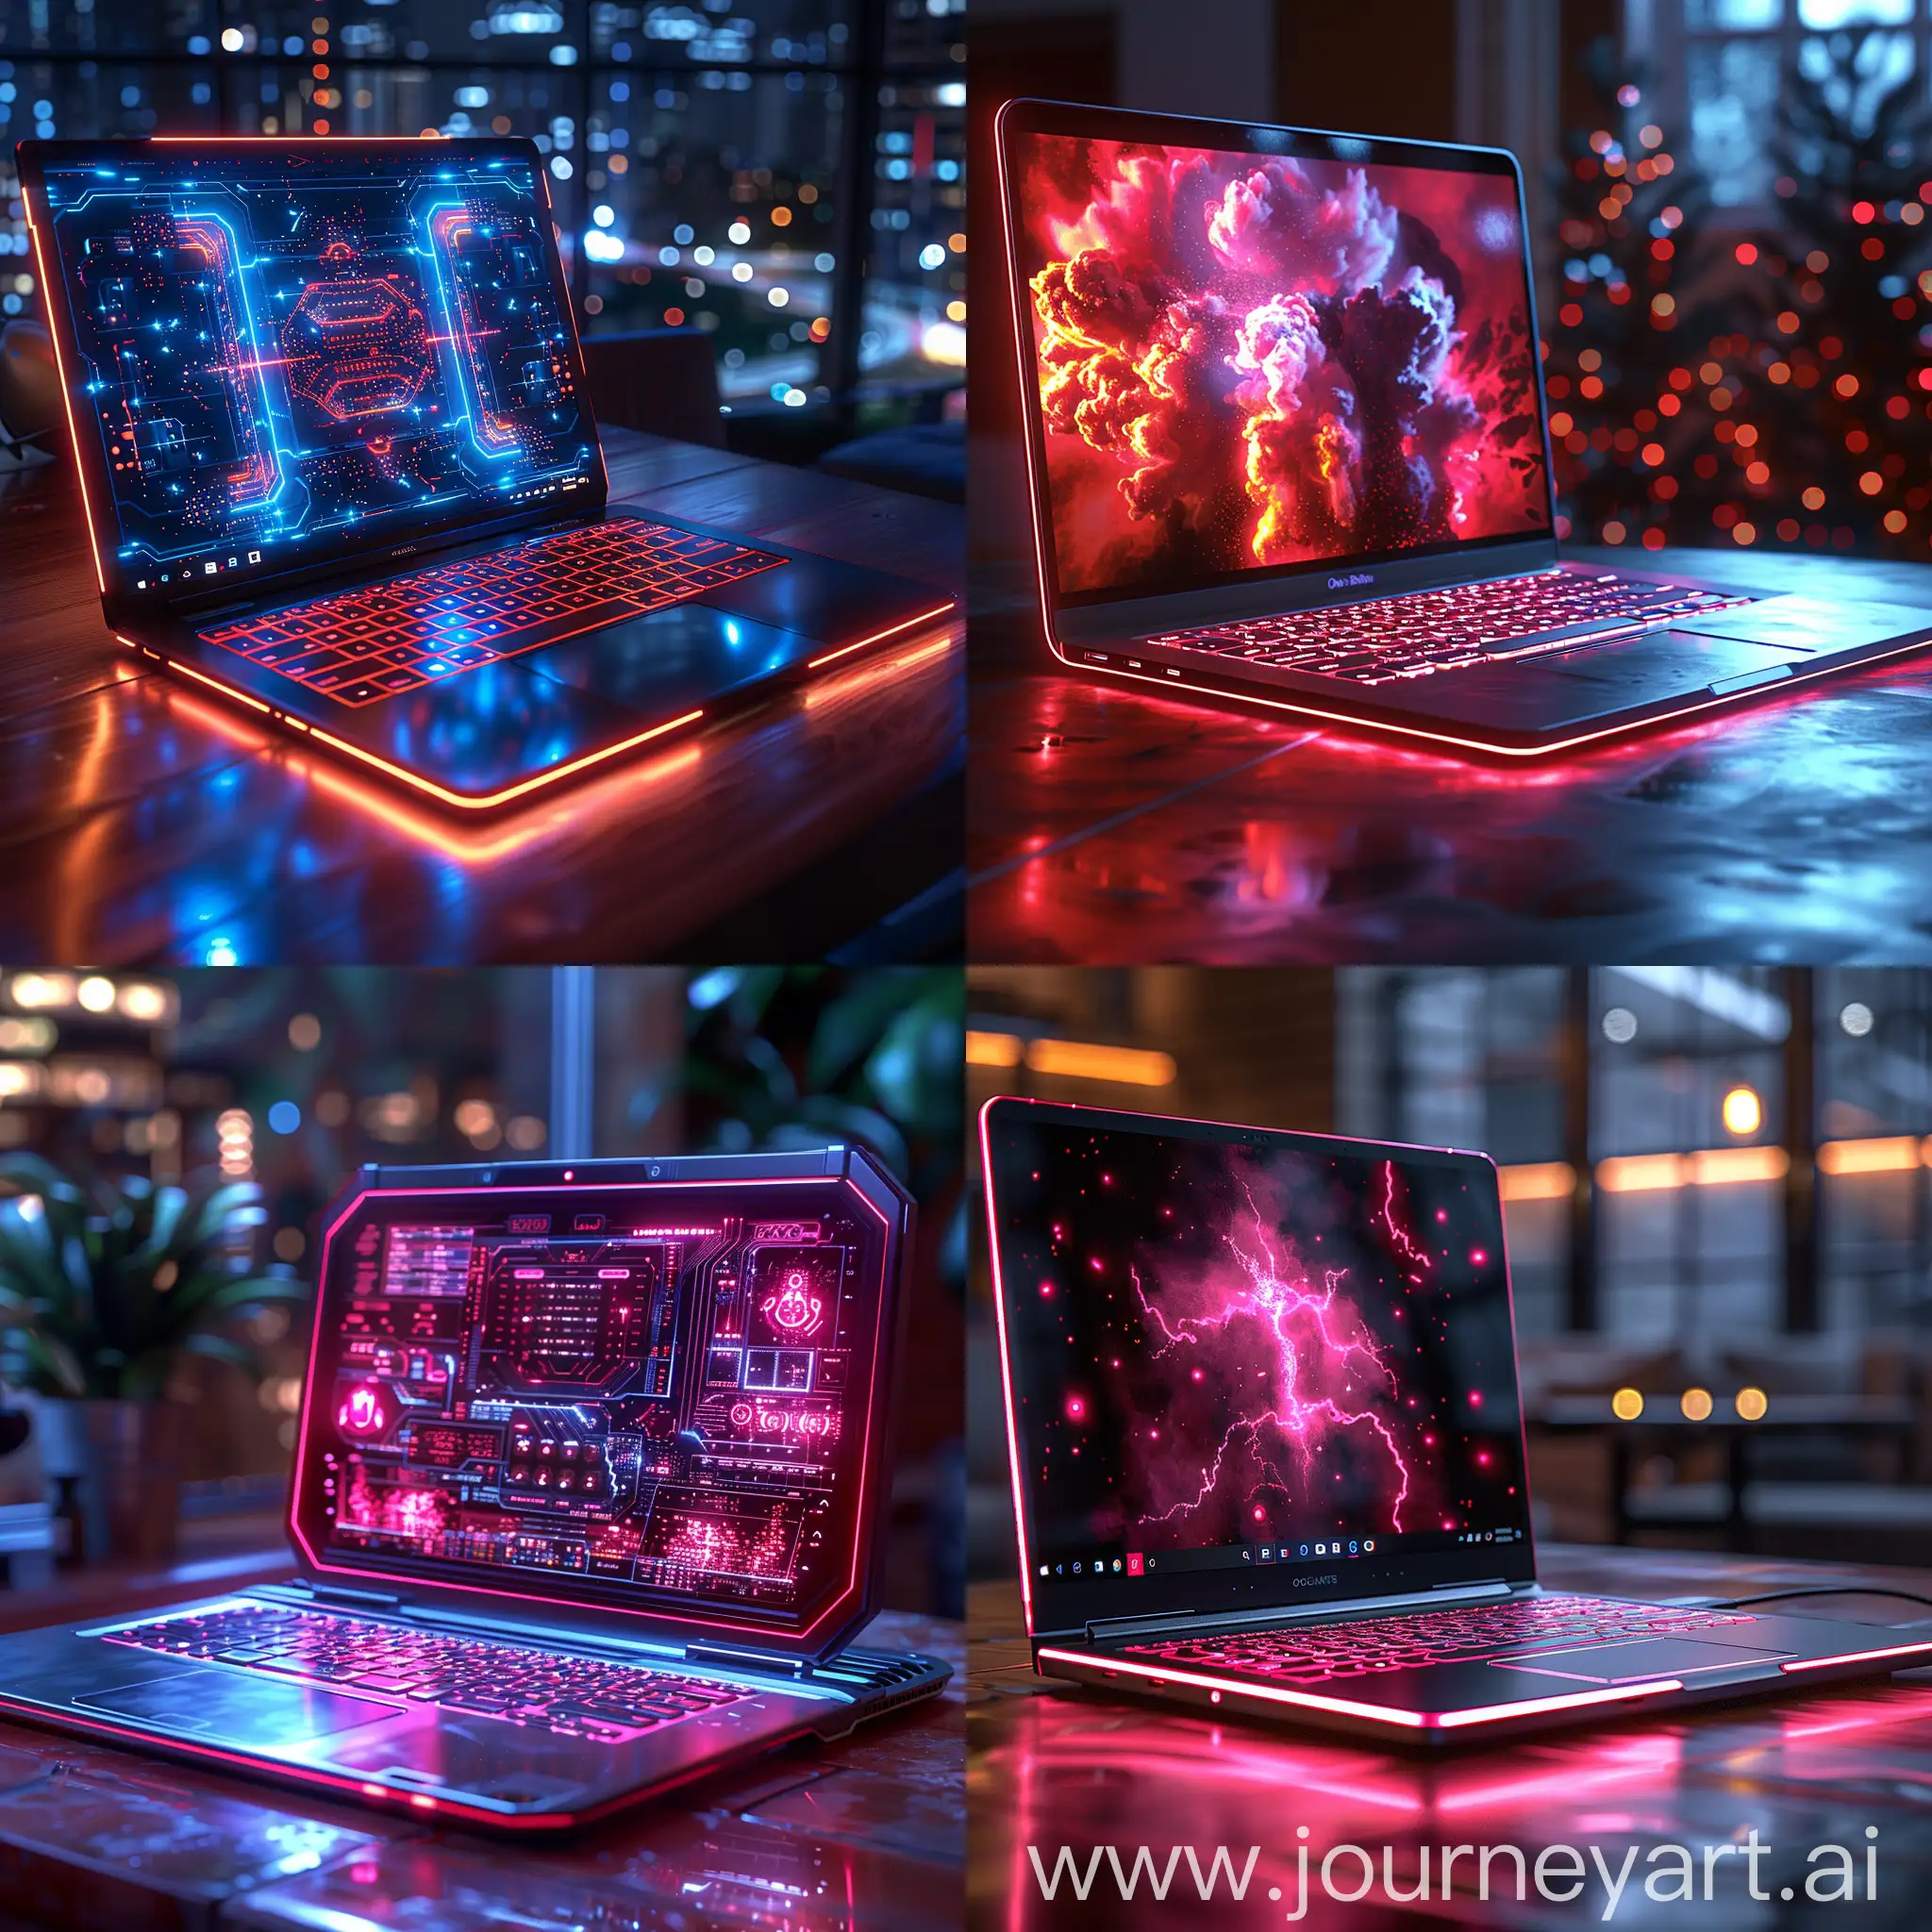 Futuristic-Ultramodern-Laptop-with-Octane-Render-Stylization